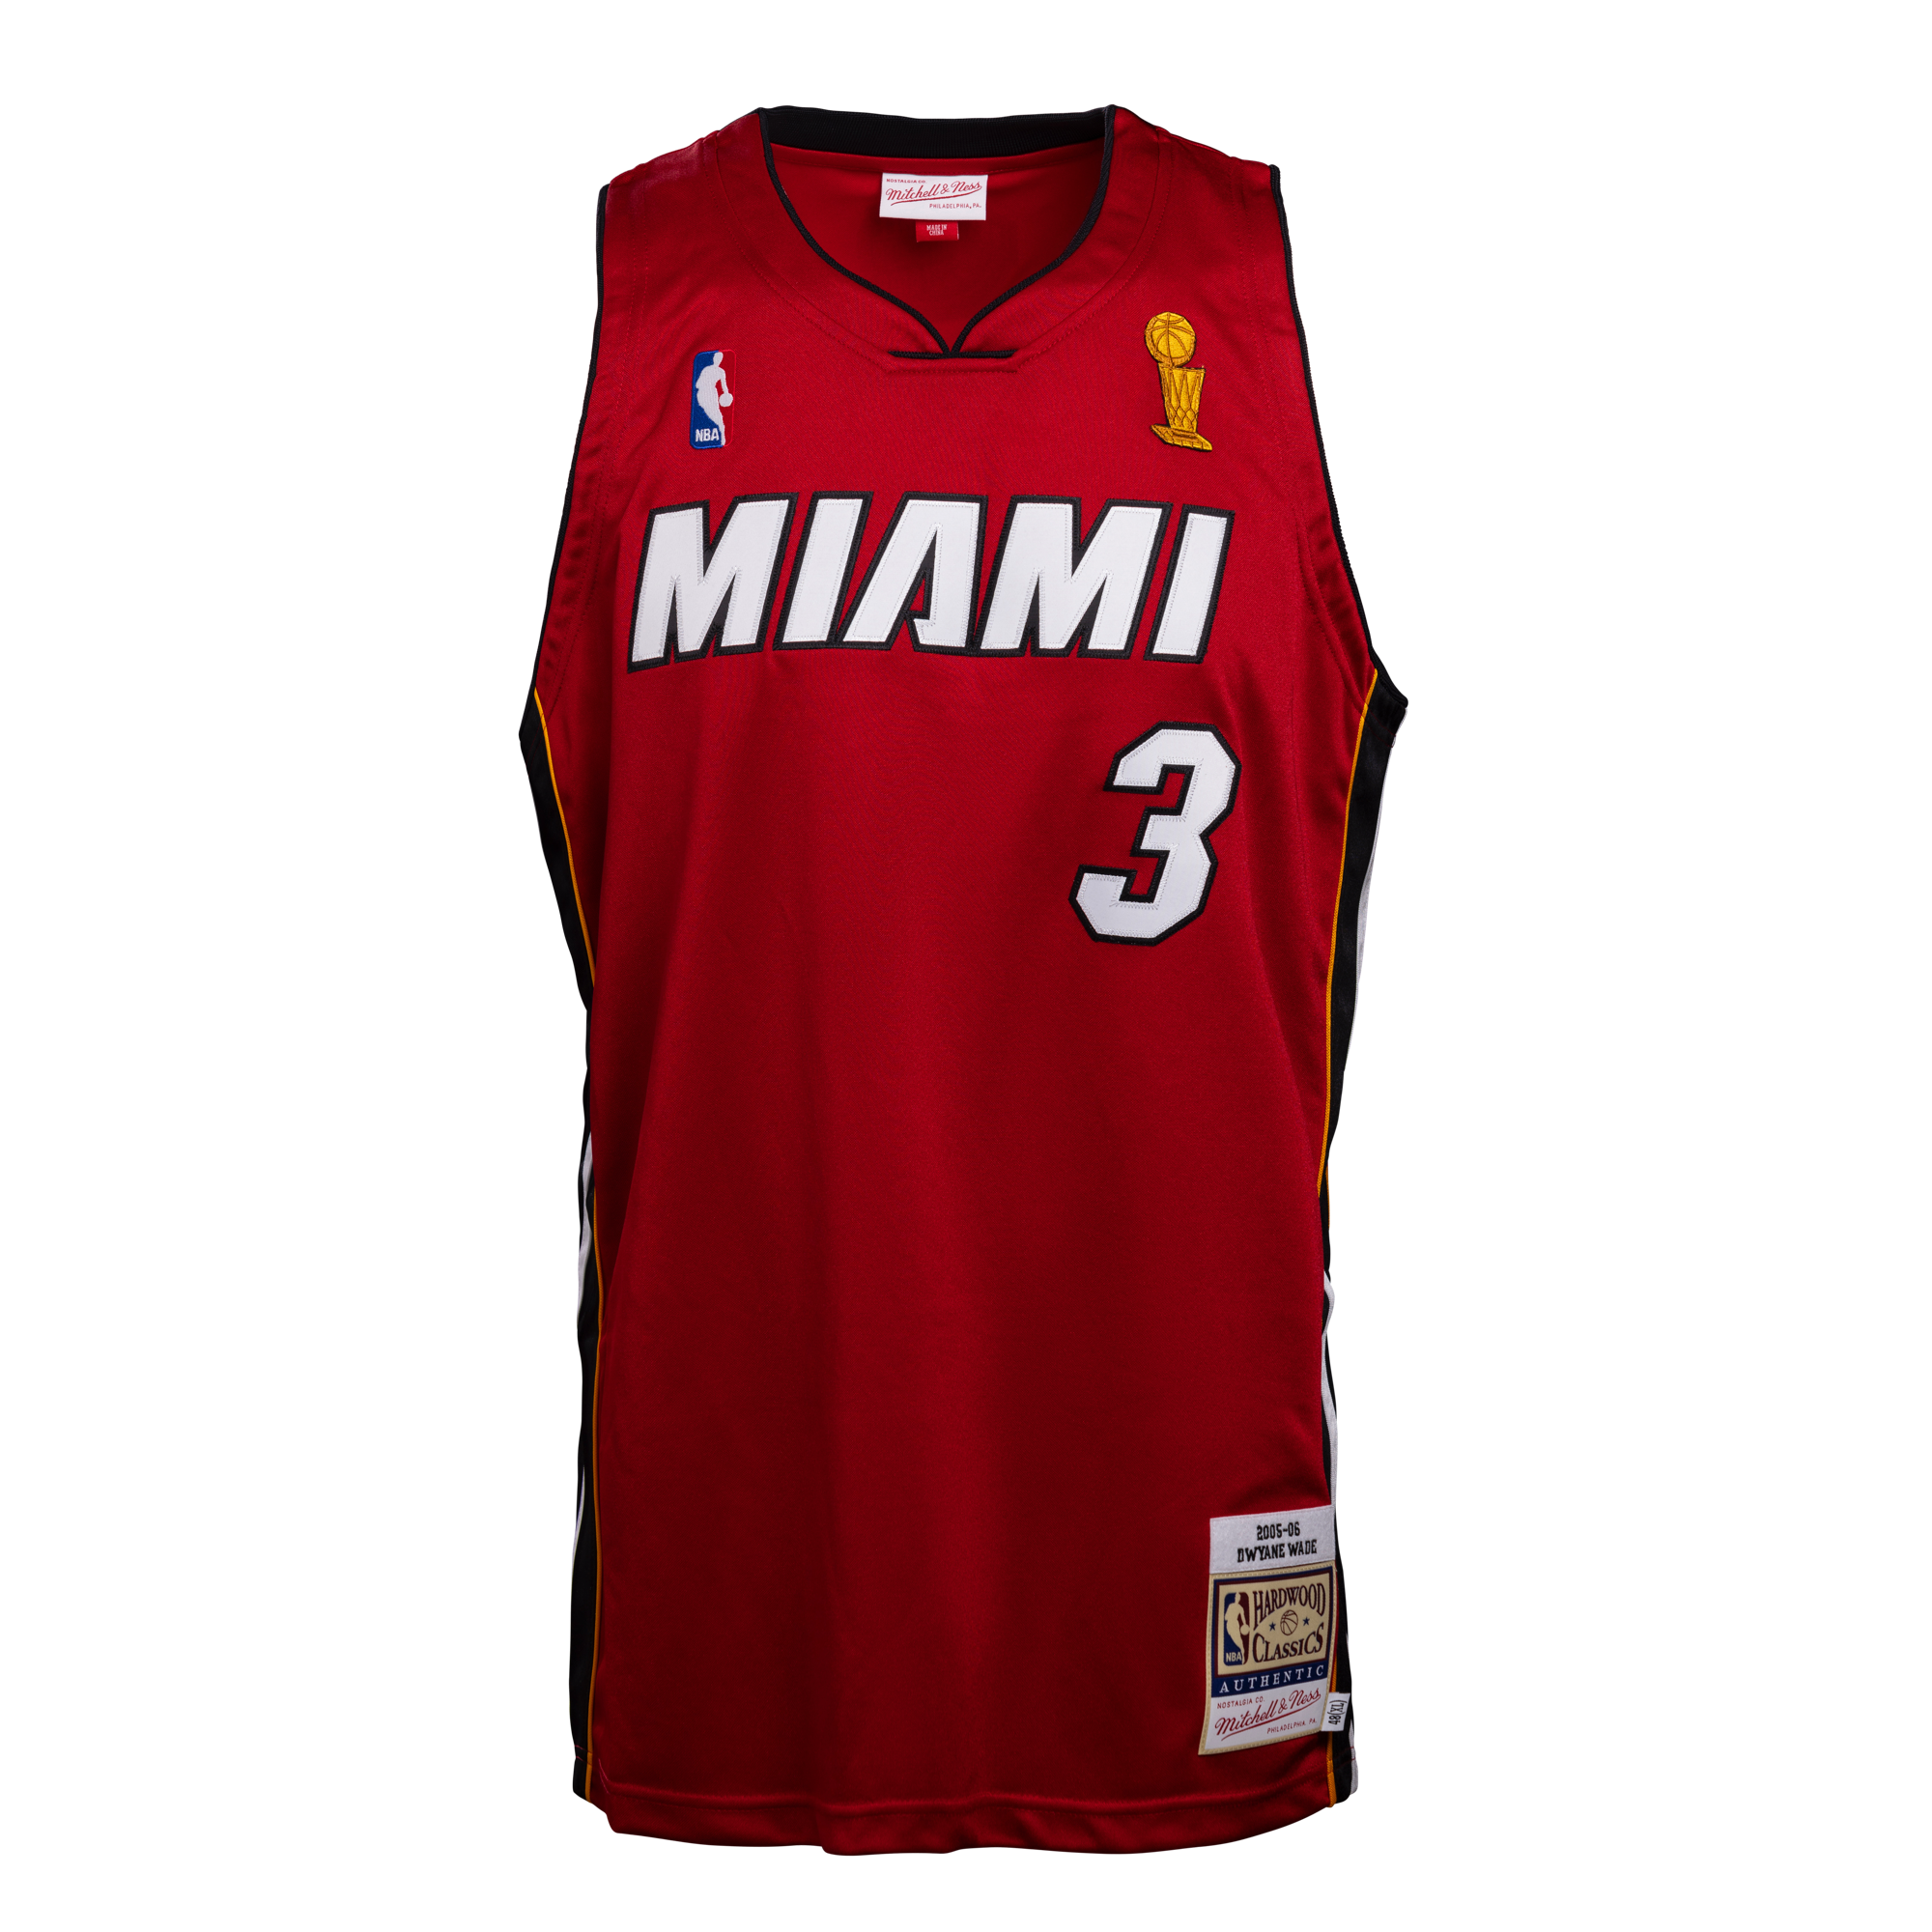 Dwyane Wade 3 Miami Heat 2005-06 Mitchell & Ness Authentic Alternate Jersey